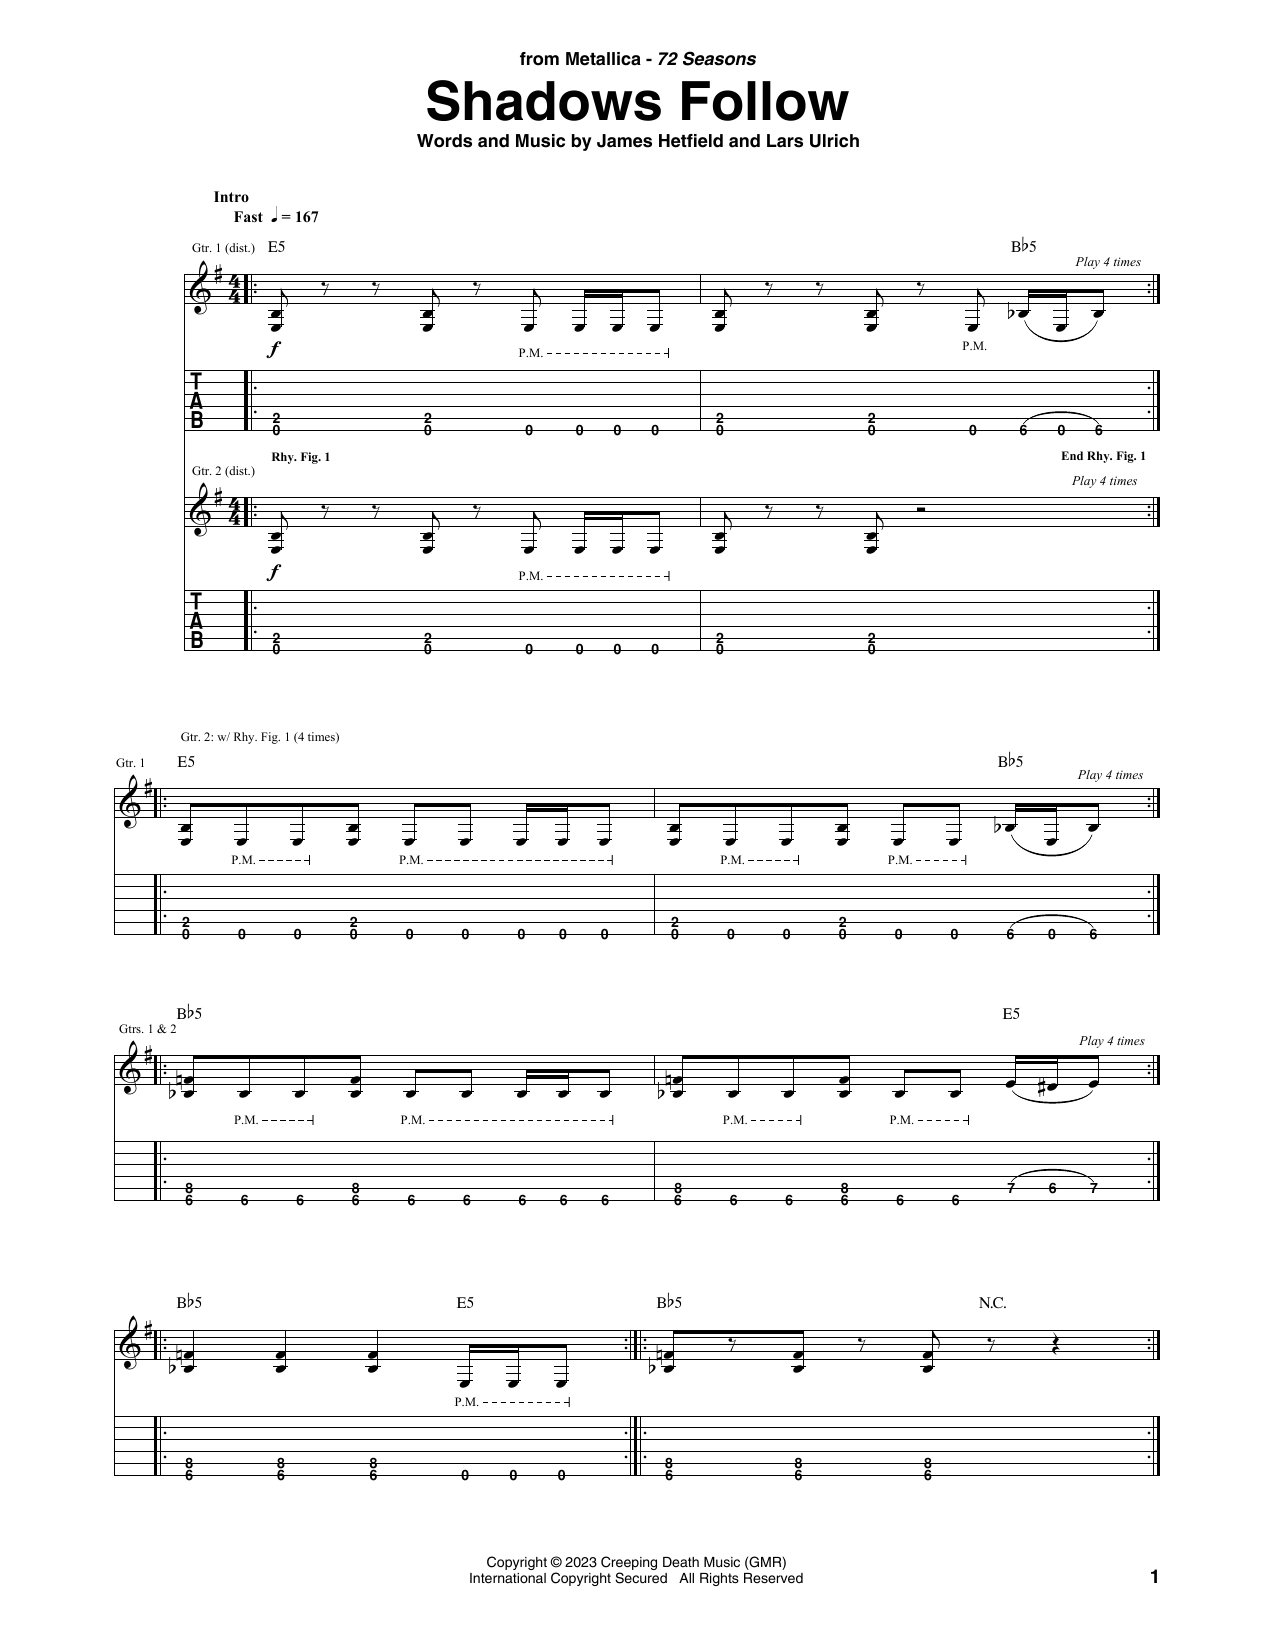 Metallica Shadows Follow sheet music notes and chords arranged for Guitar Tab